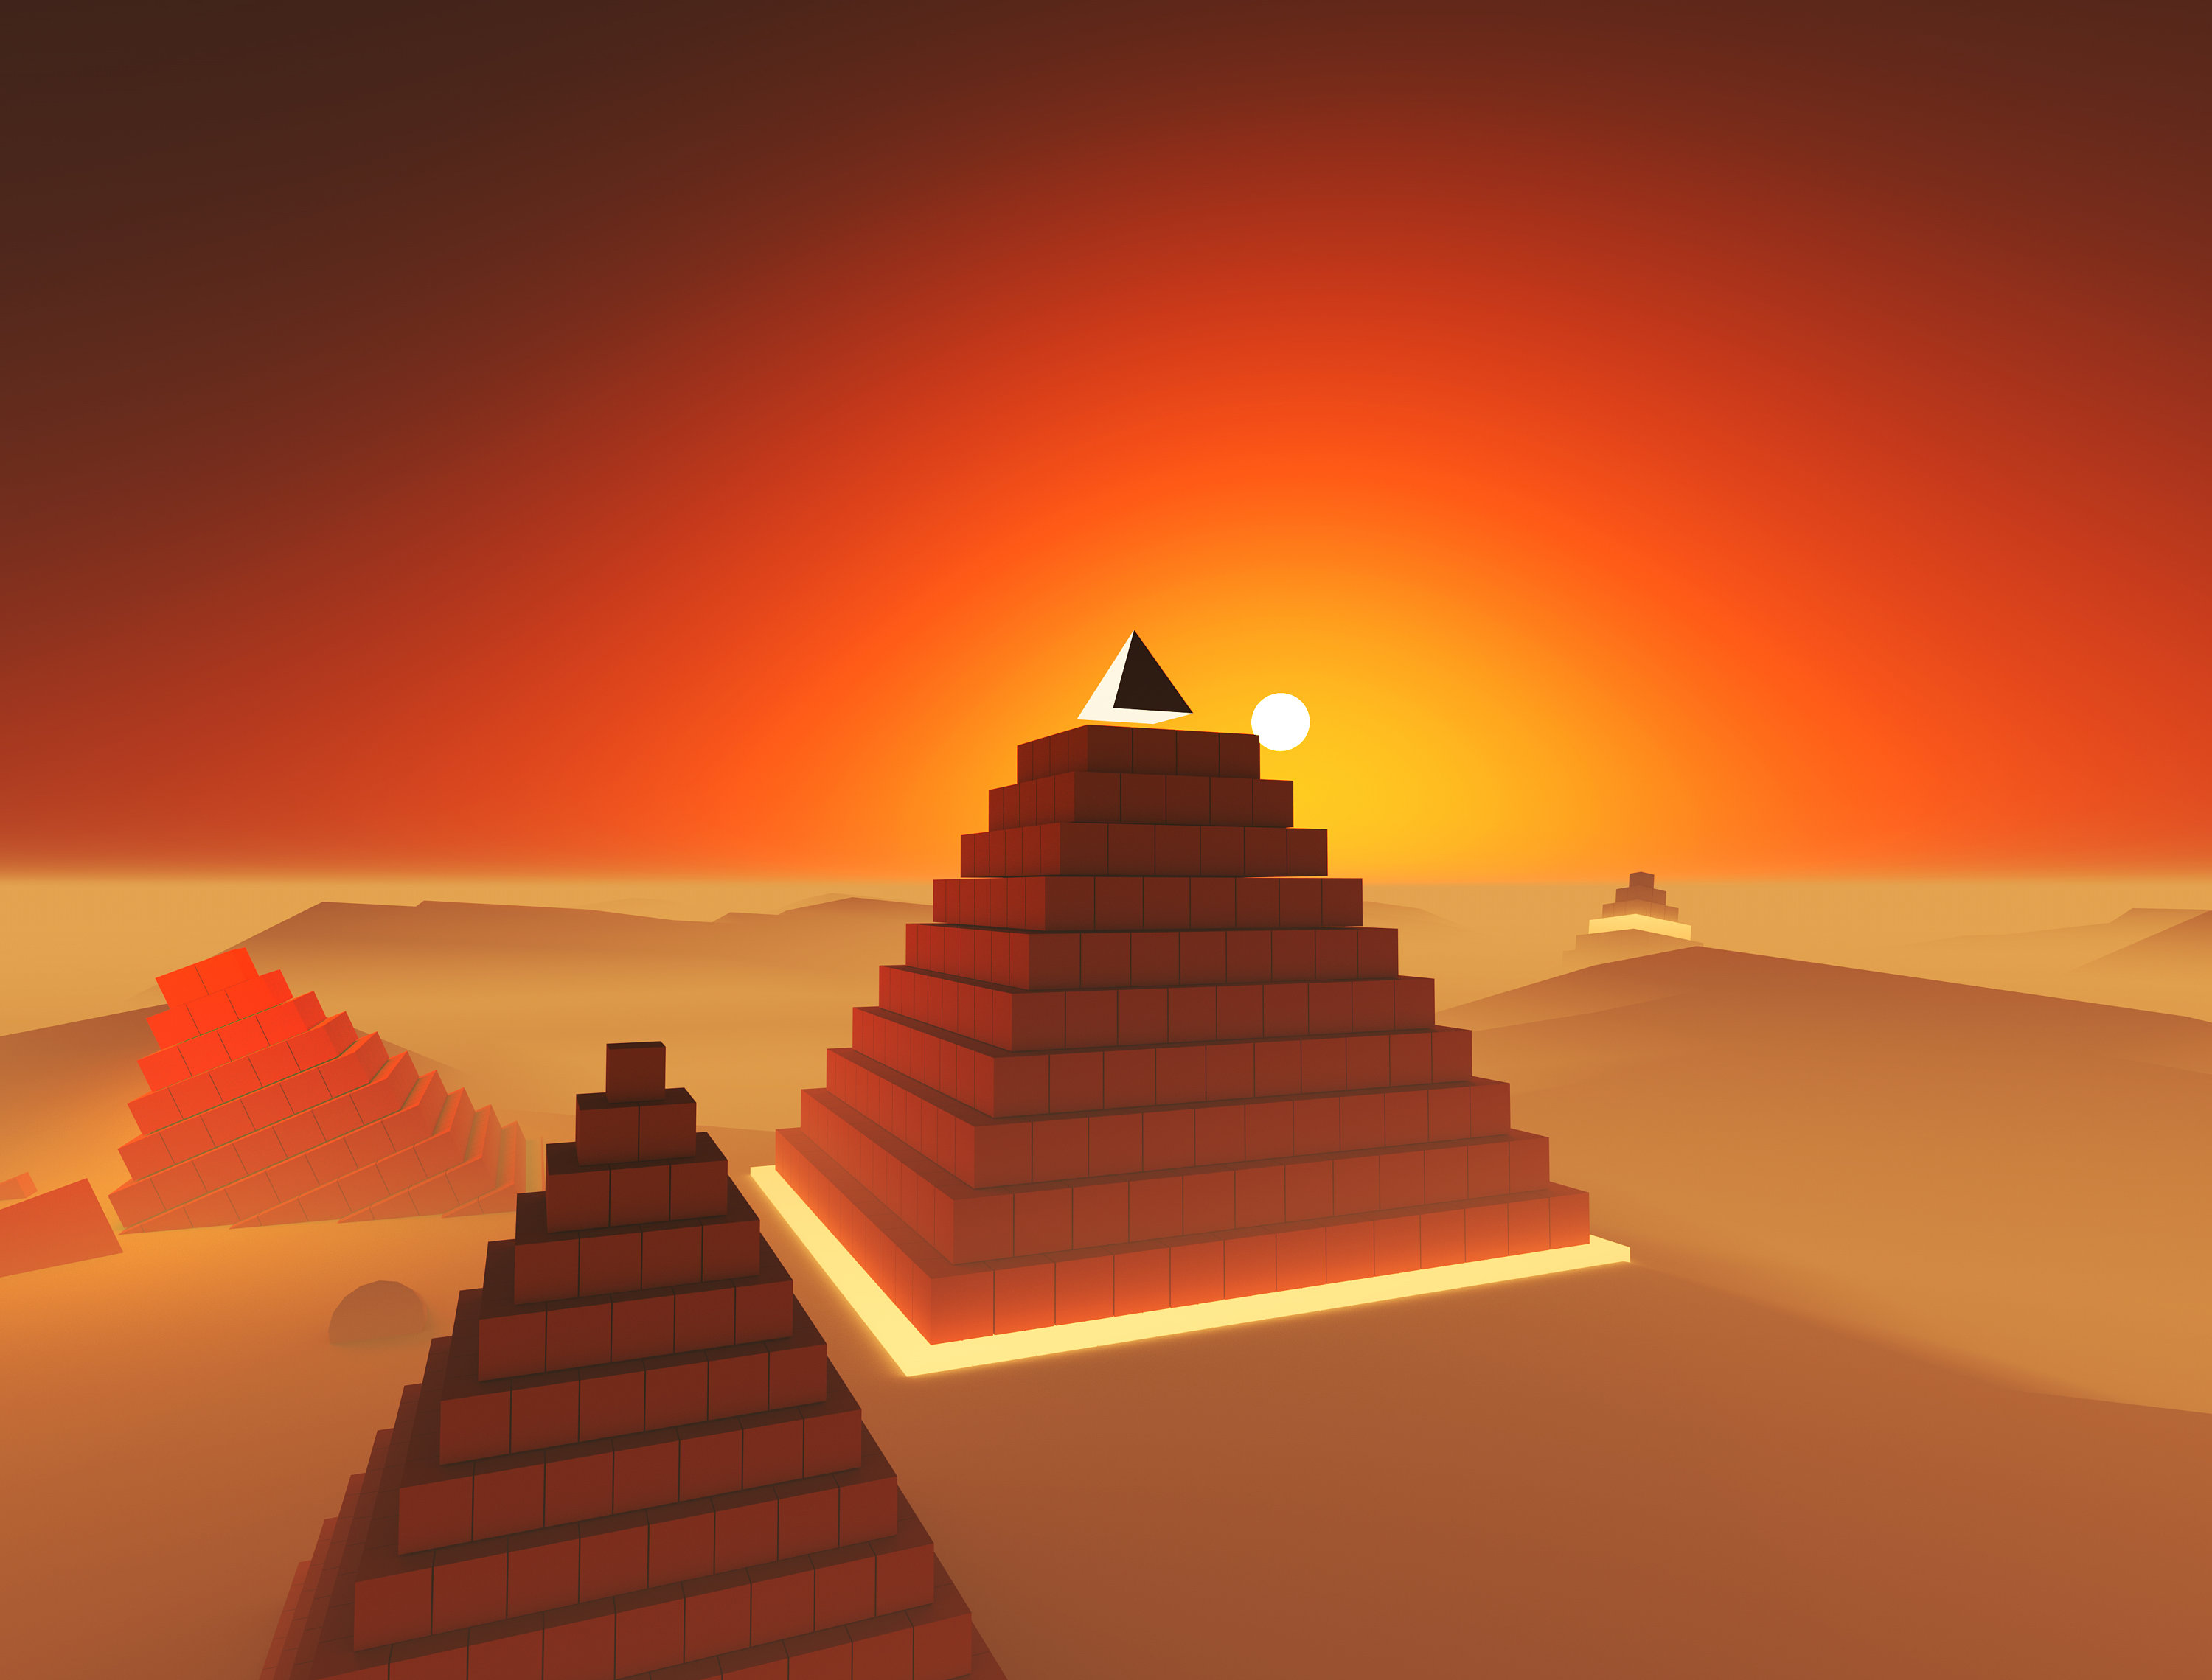 Futuristic Egyptian Pyramids by Jarod Octon on Dribbble